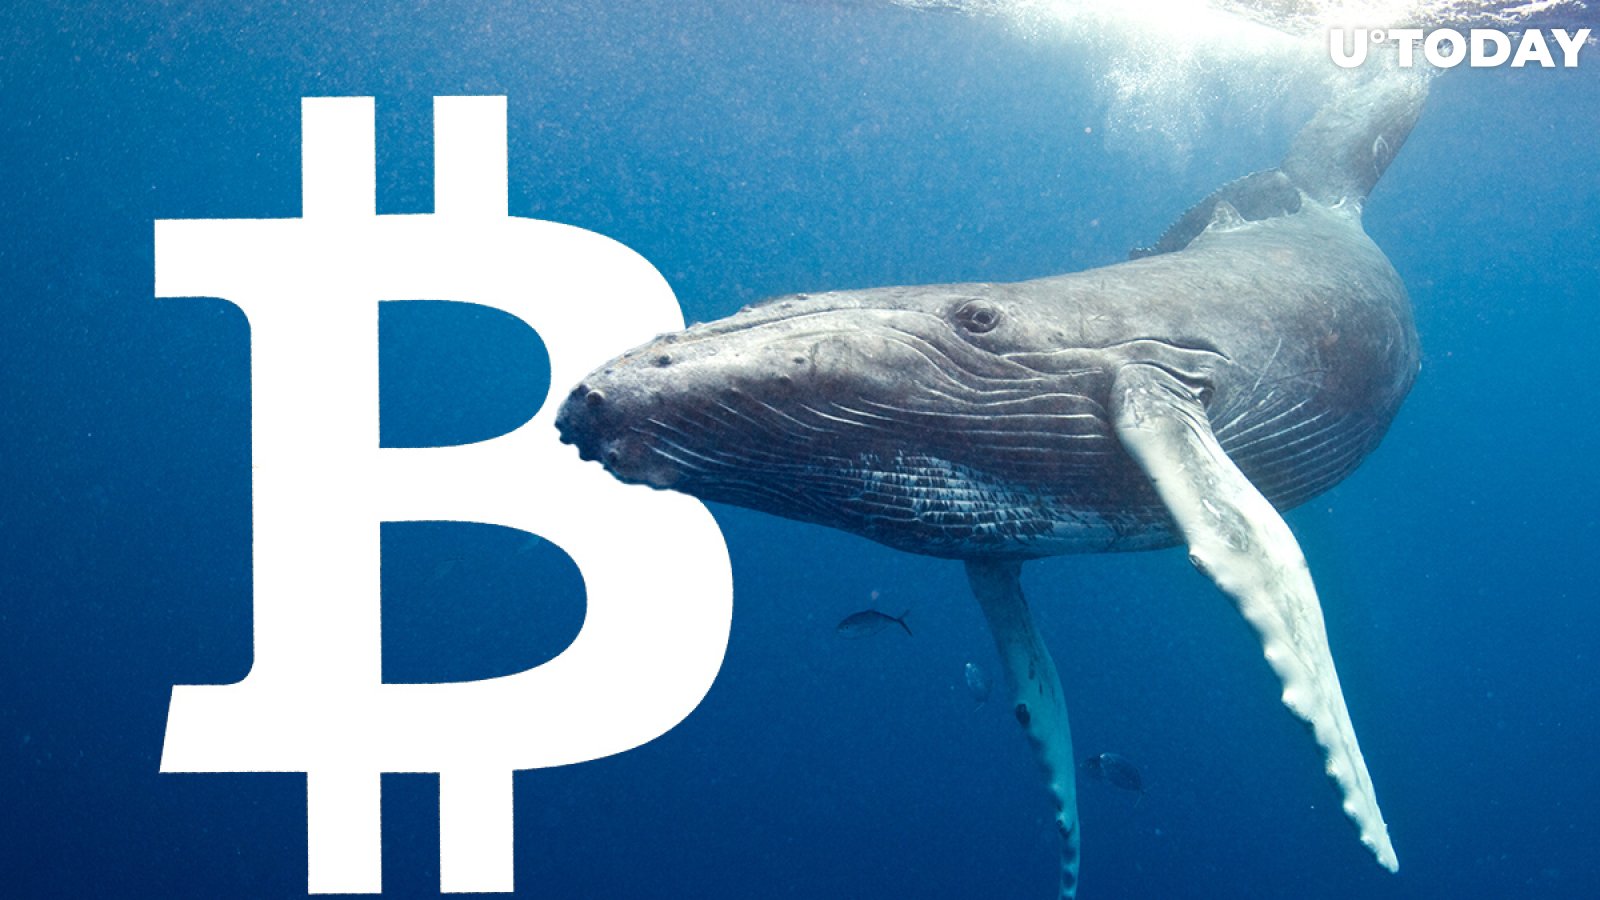 Bitcoin (BTC) Whales "Bought the Dip," Glassnode Data Says